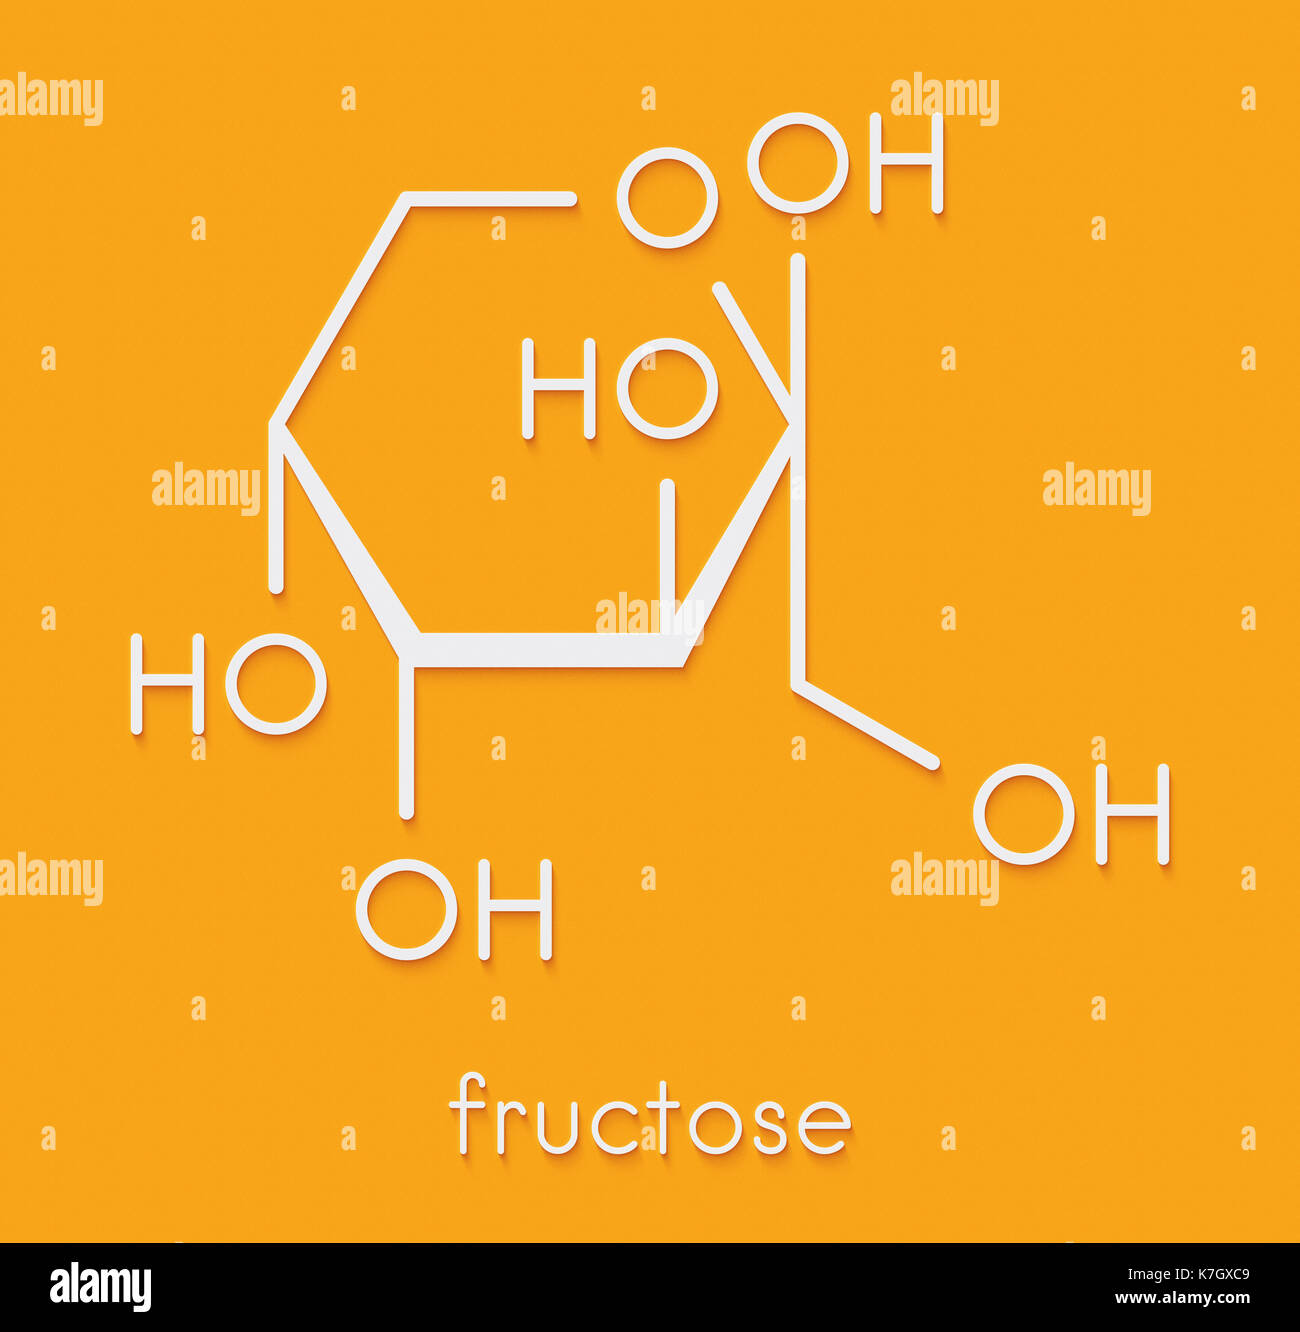 Fructose (D-fructose) fruit sugar molecule. Component of high-fructose corn syrup (HFCS). Skeletal formula. Stock Photo